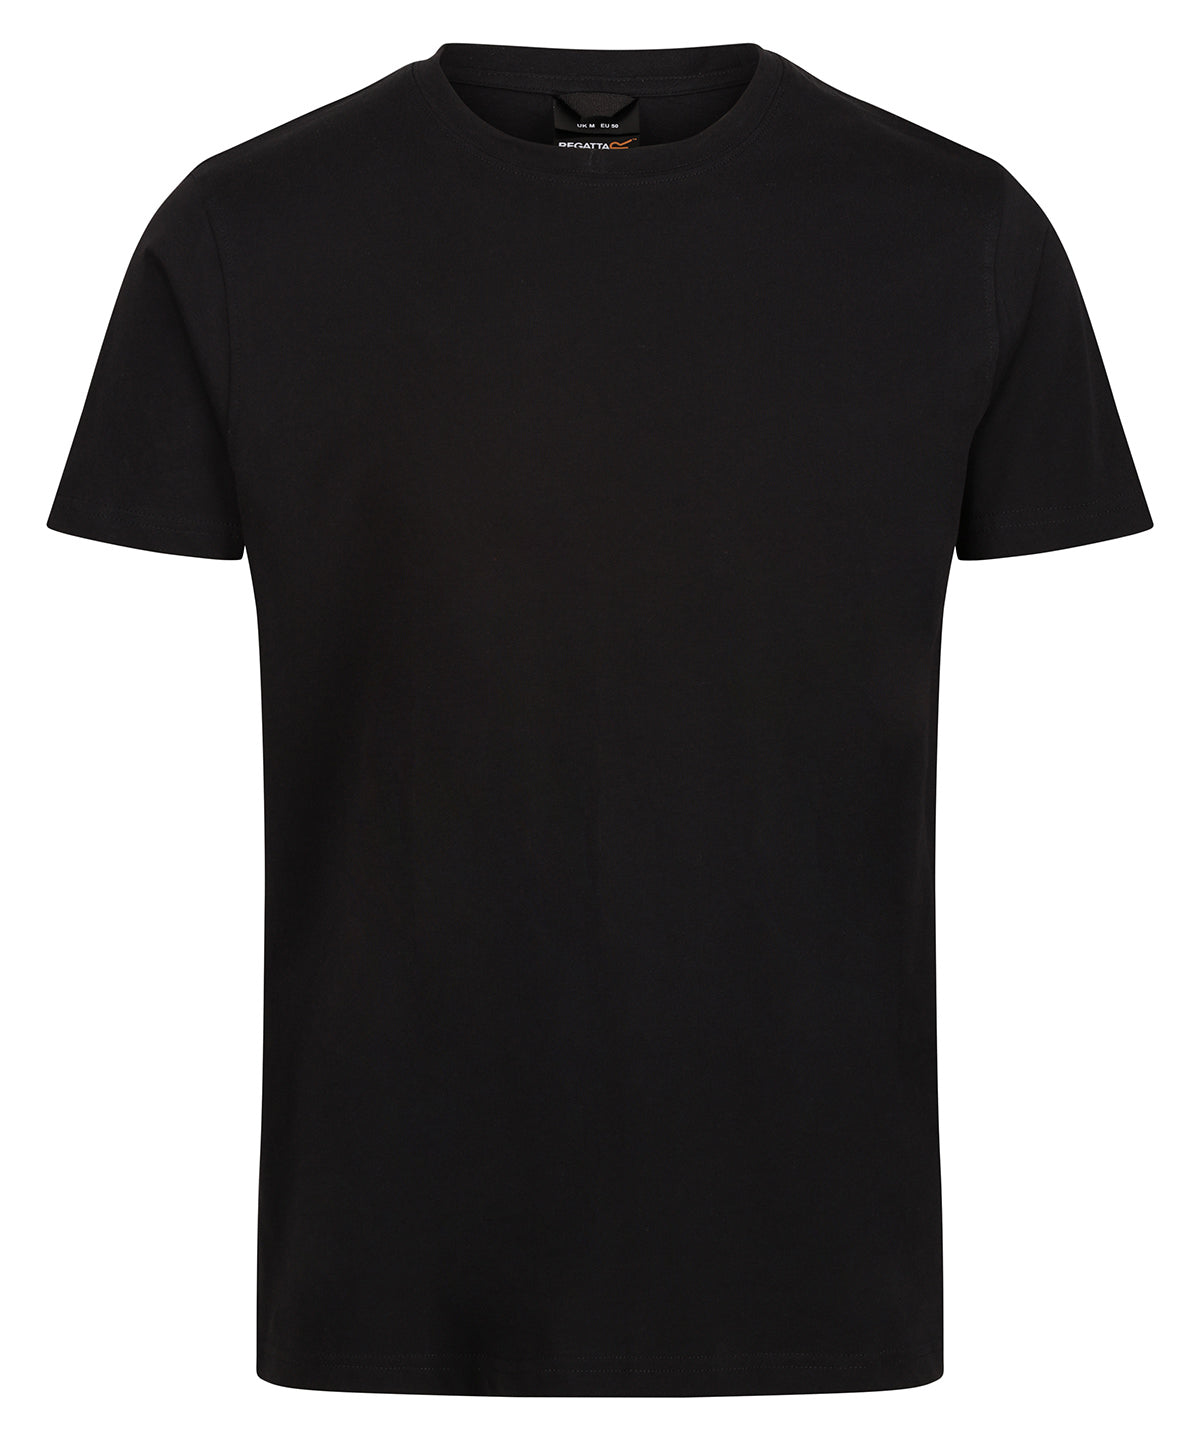 Regatta Pro soft-touch cotton t-shirt